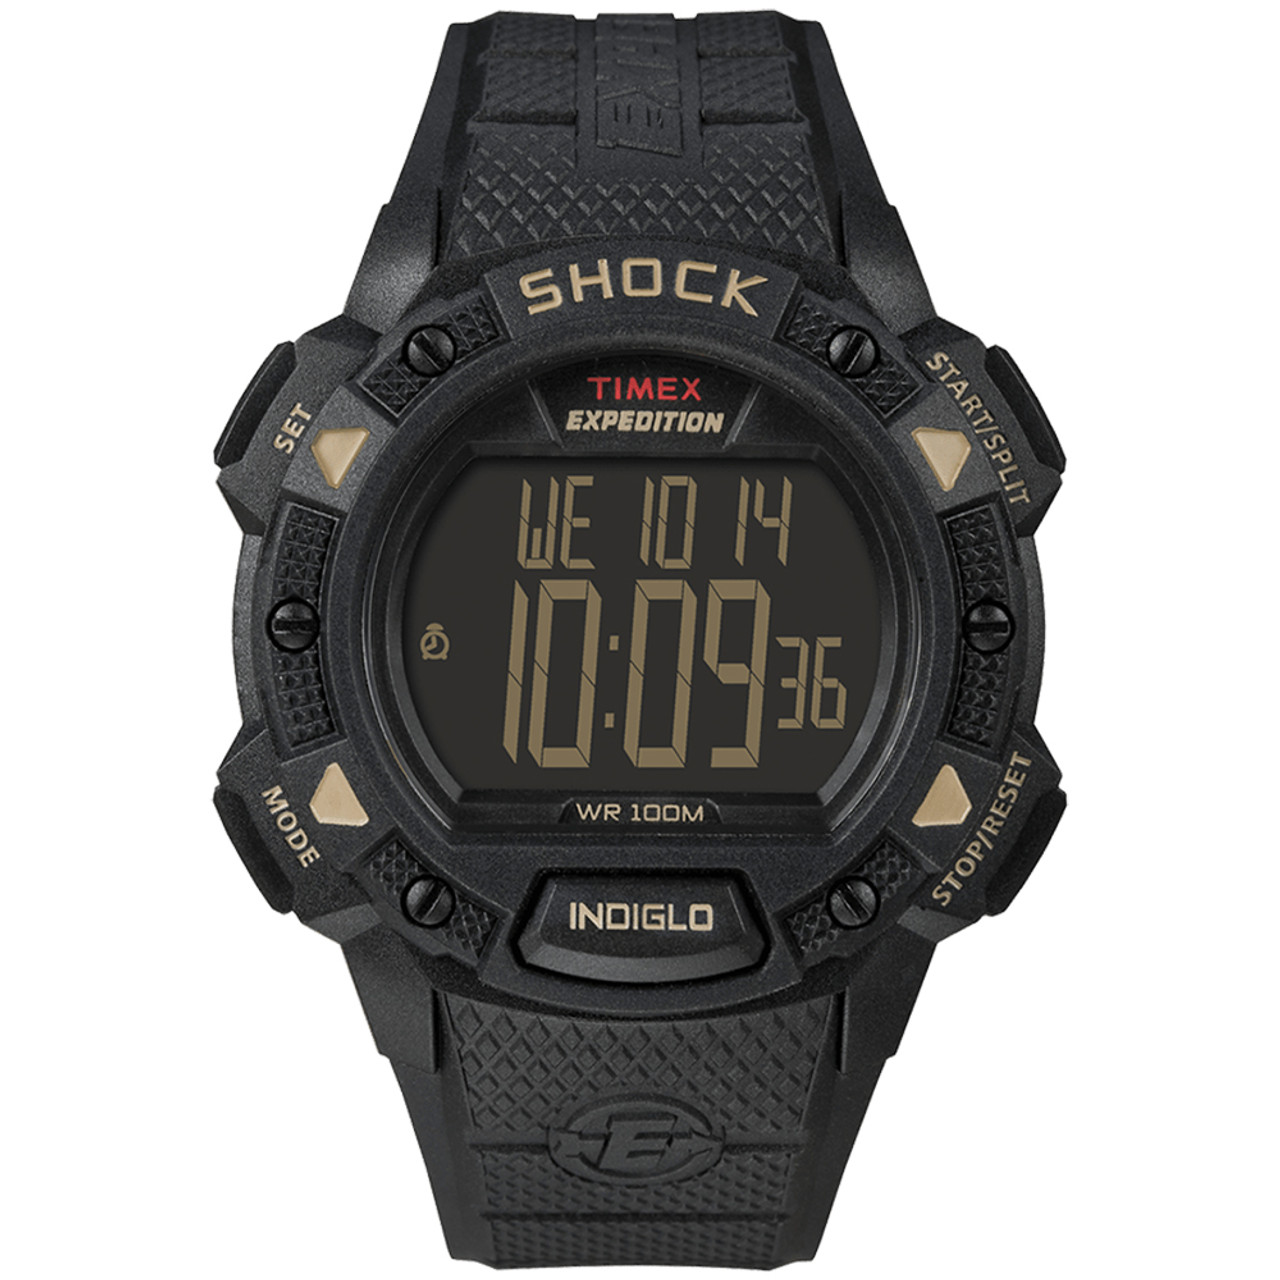 Timex Expedition Shock Chrono Alarm Timer - Black [T49896]